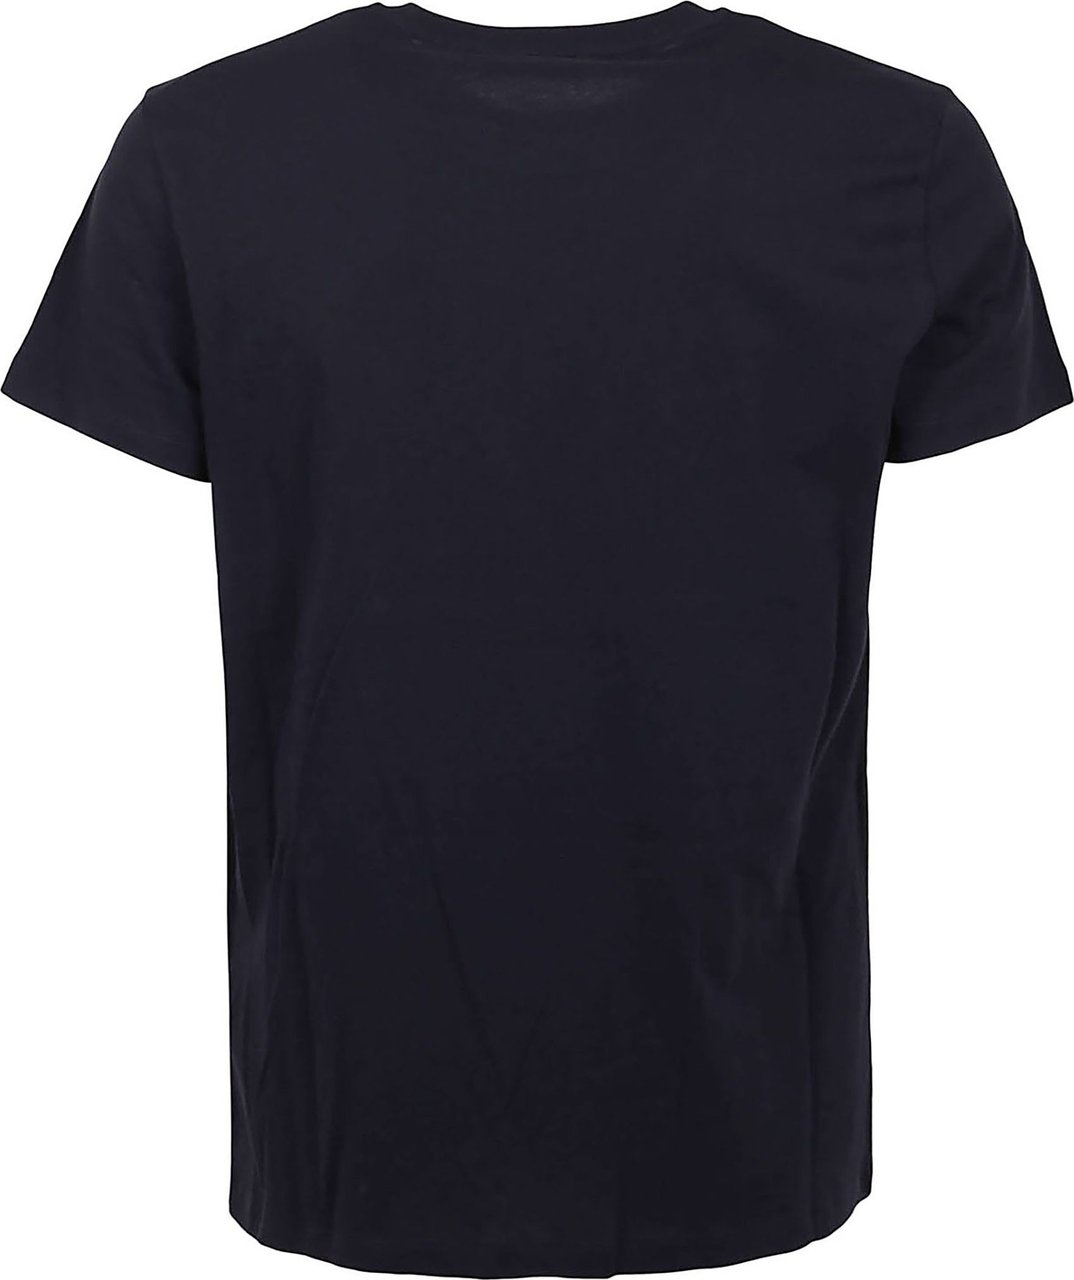 Jil Sander T-Shirt Cn Ss Blauw